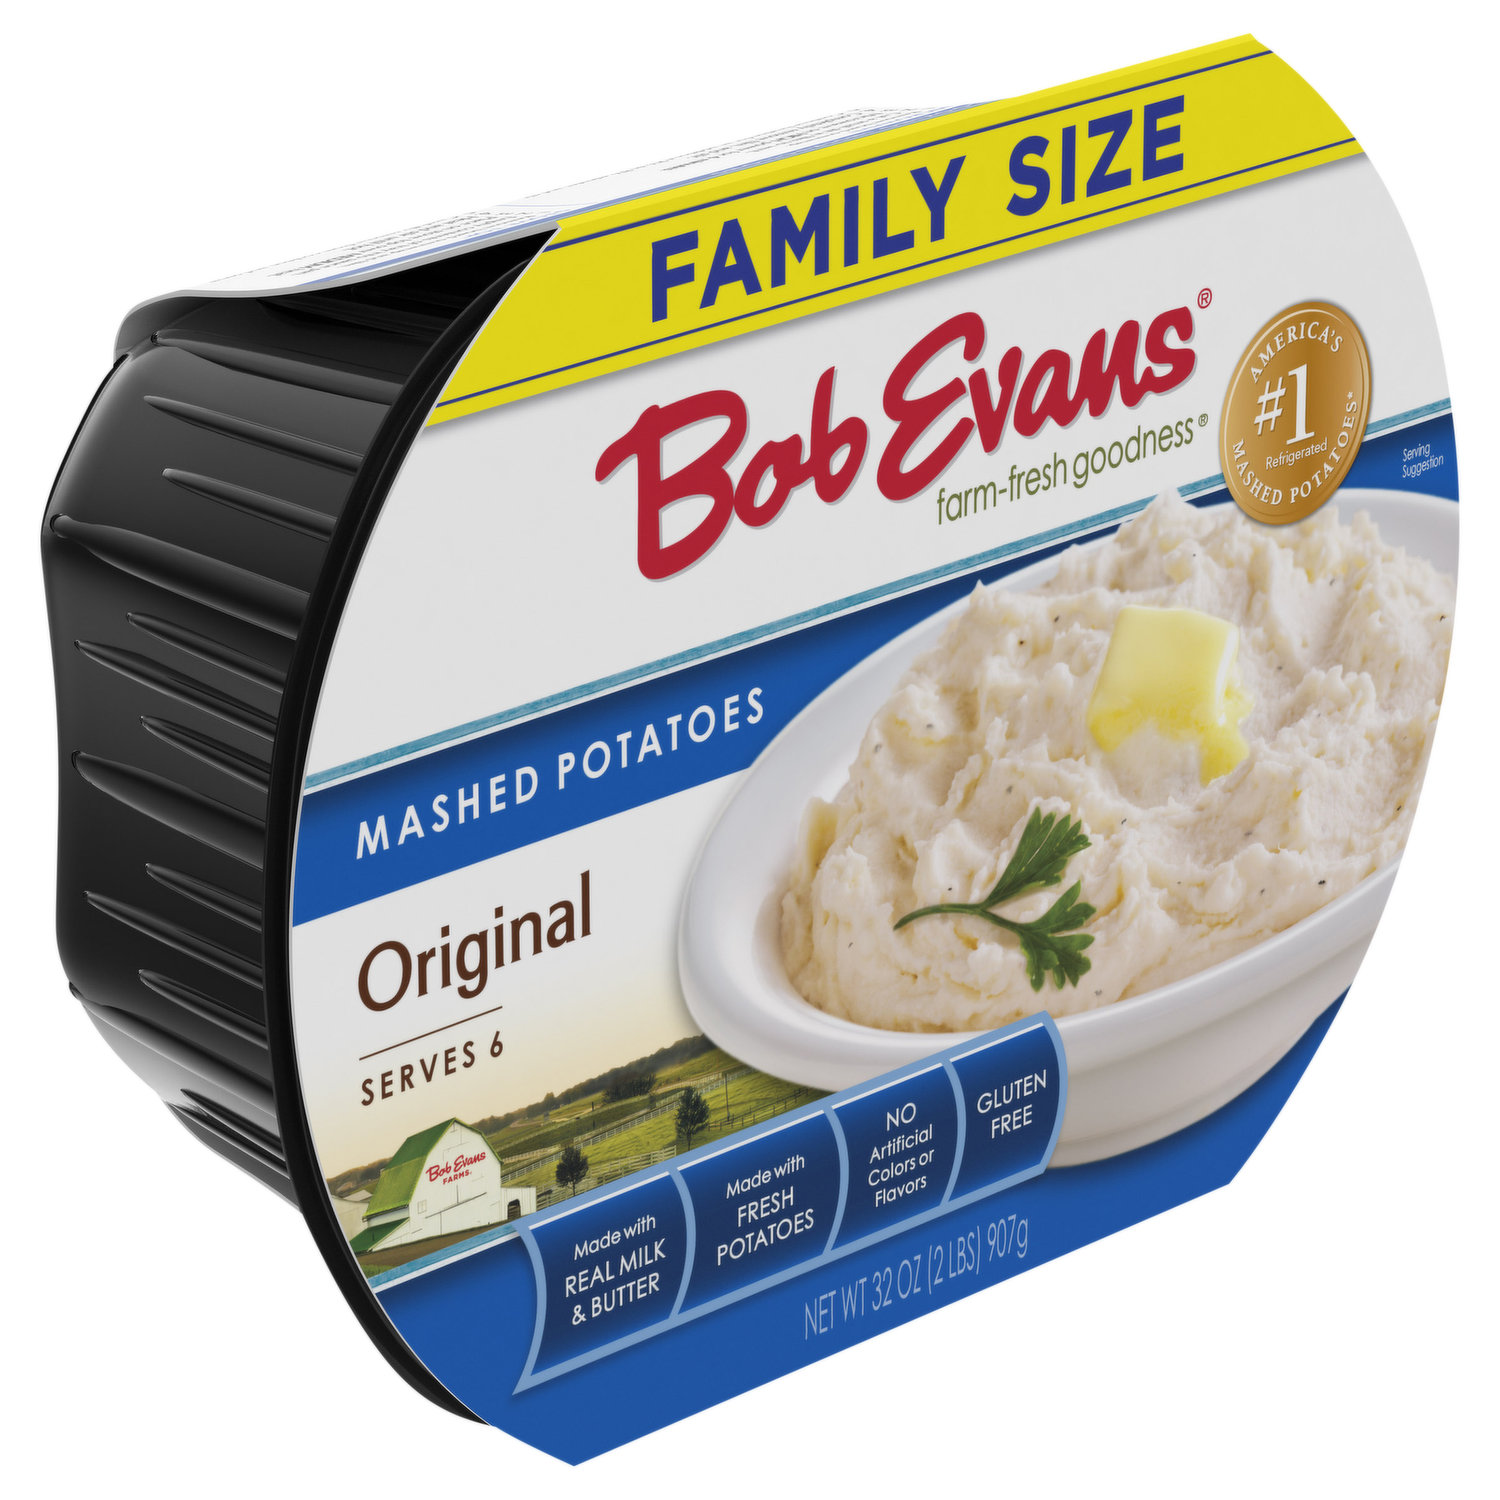 Bob Evans Original Mashed Potatoes Family Size, 32 oz - Kroger